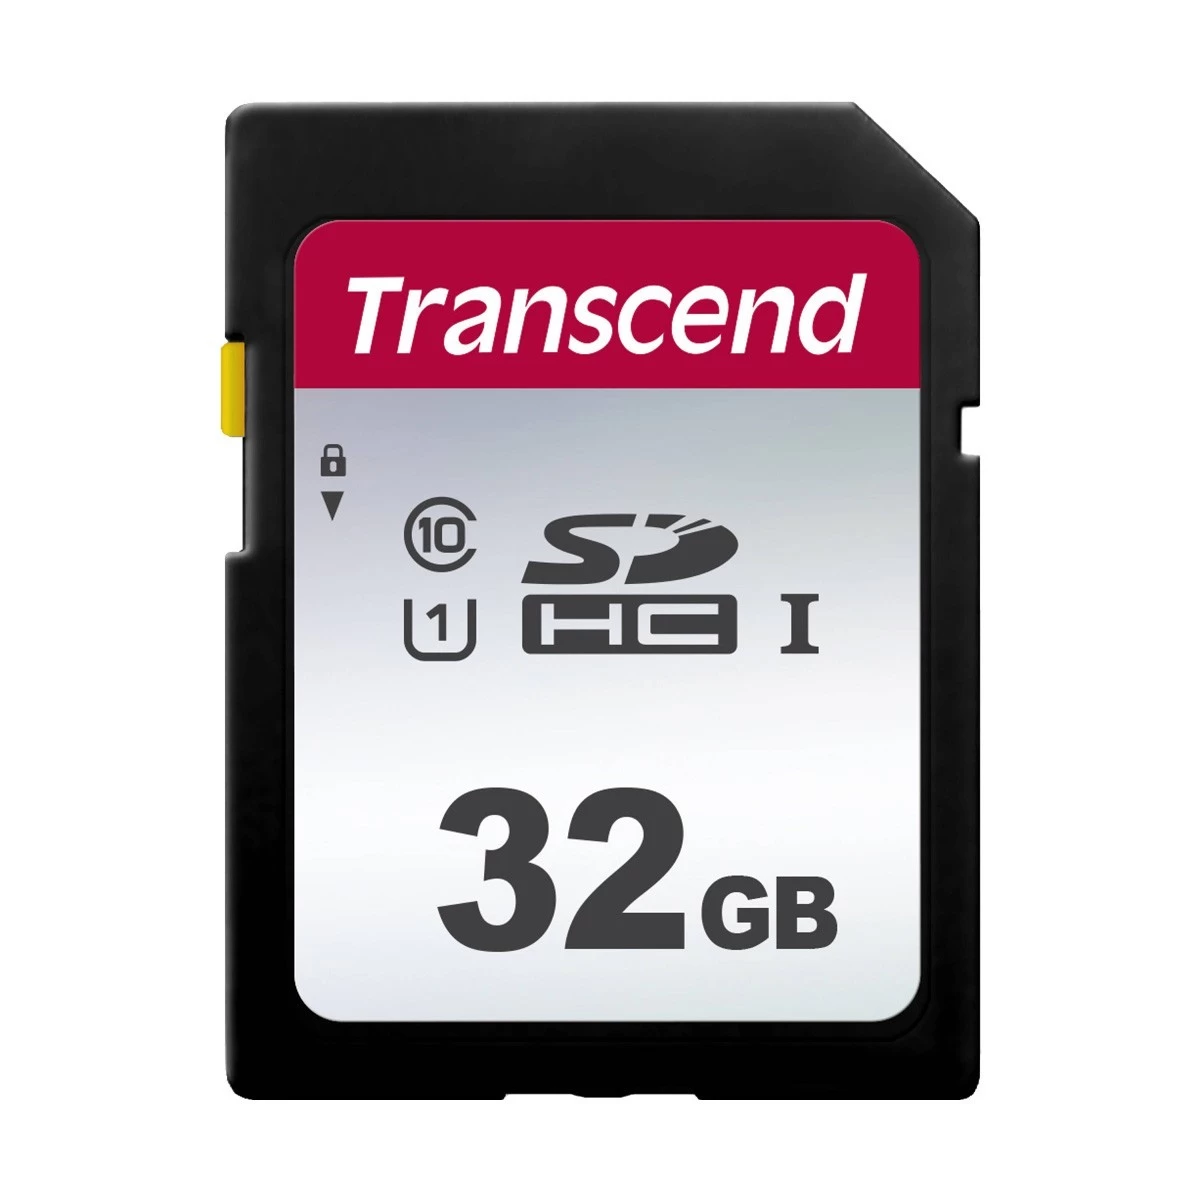 Transcend 300S 32GB SDXC/SDHC Class 10 UHS-I U1 Memory Card #TS32GSDC300S